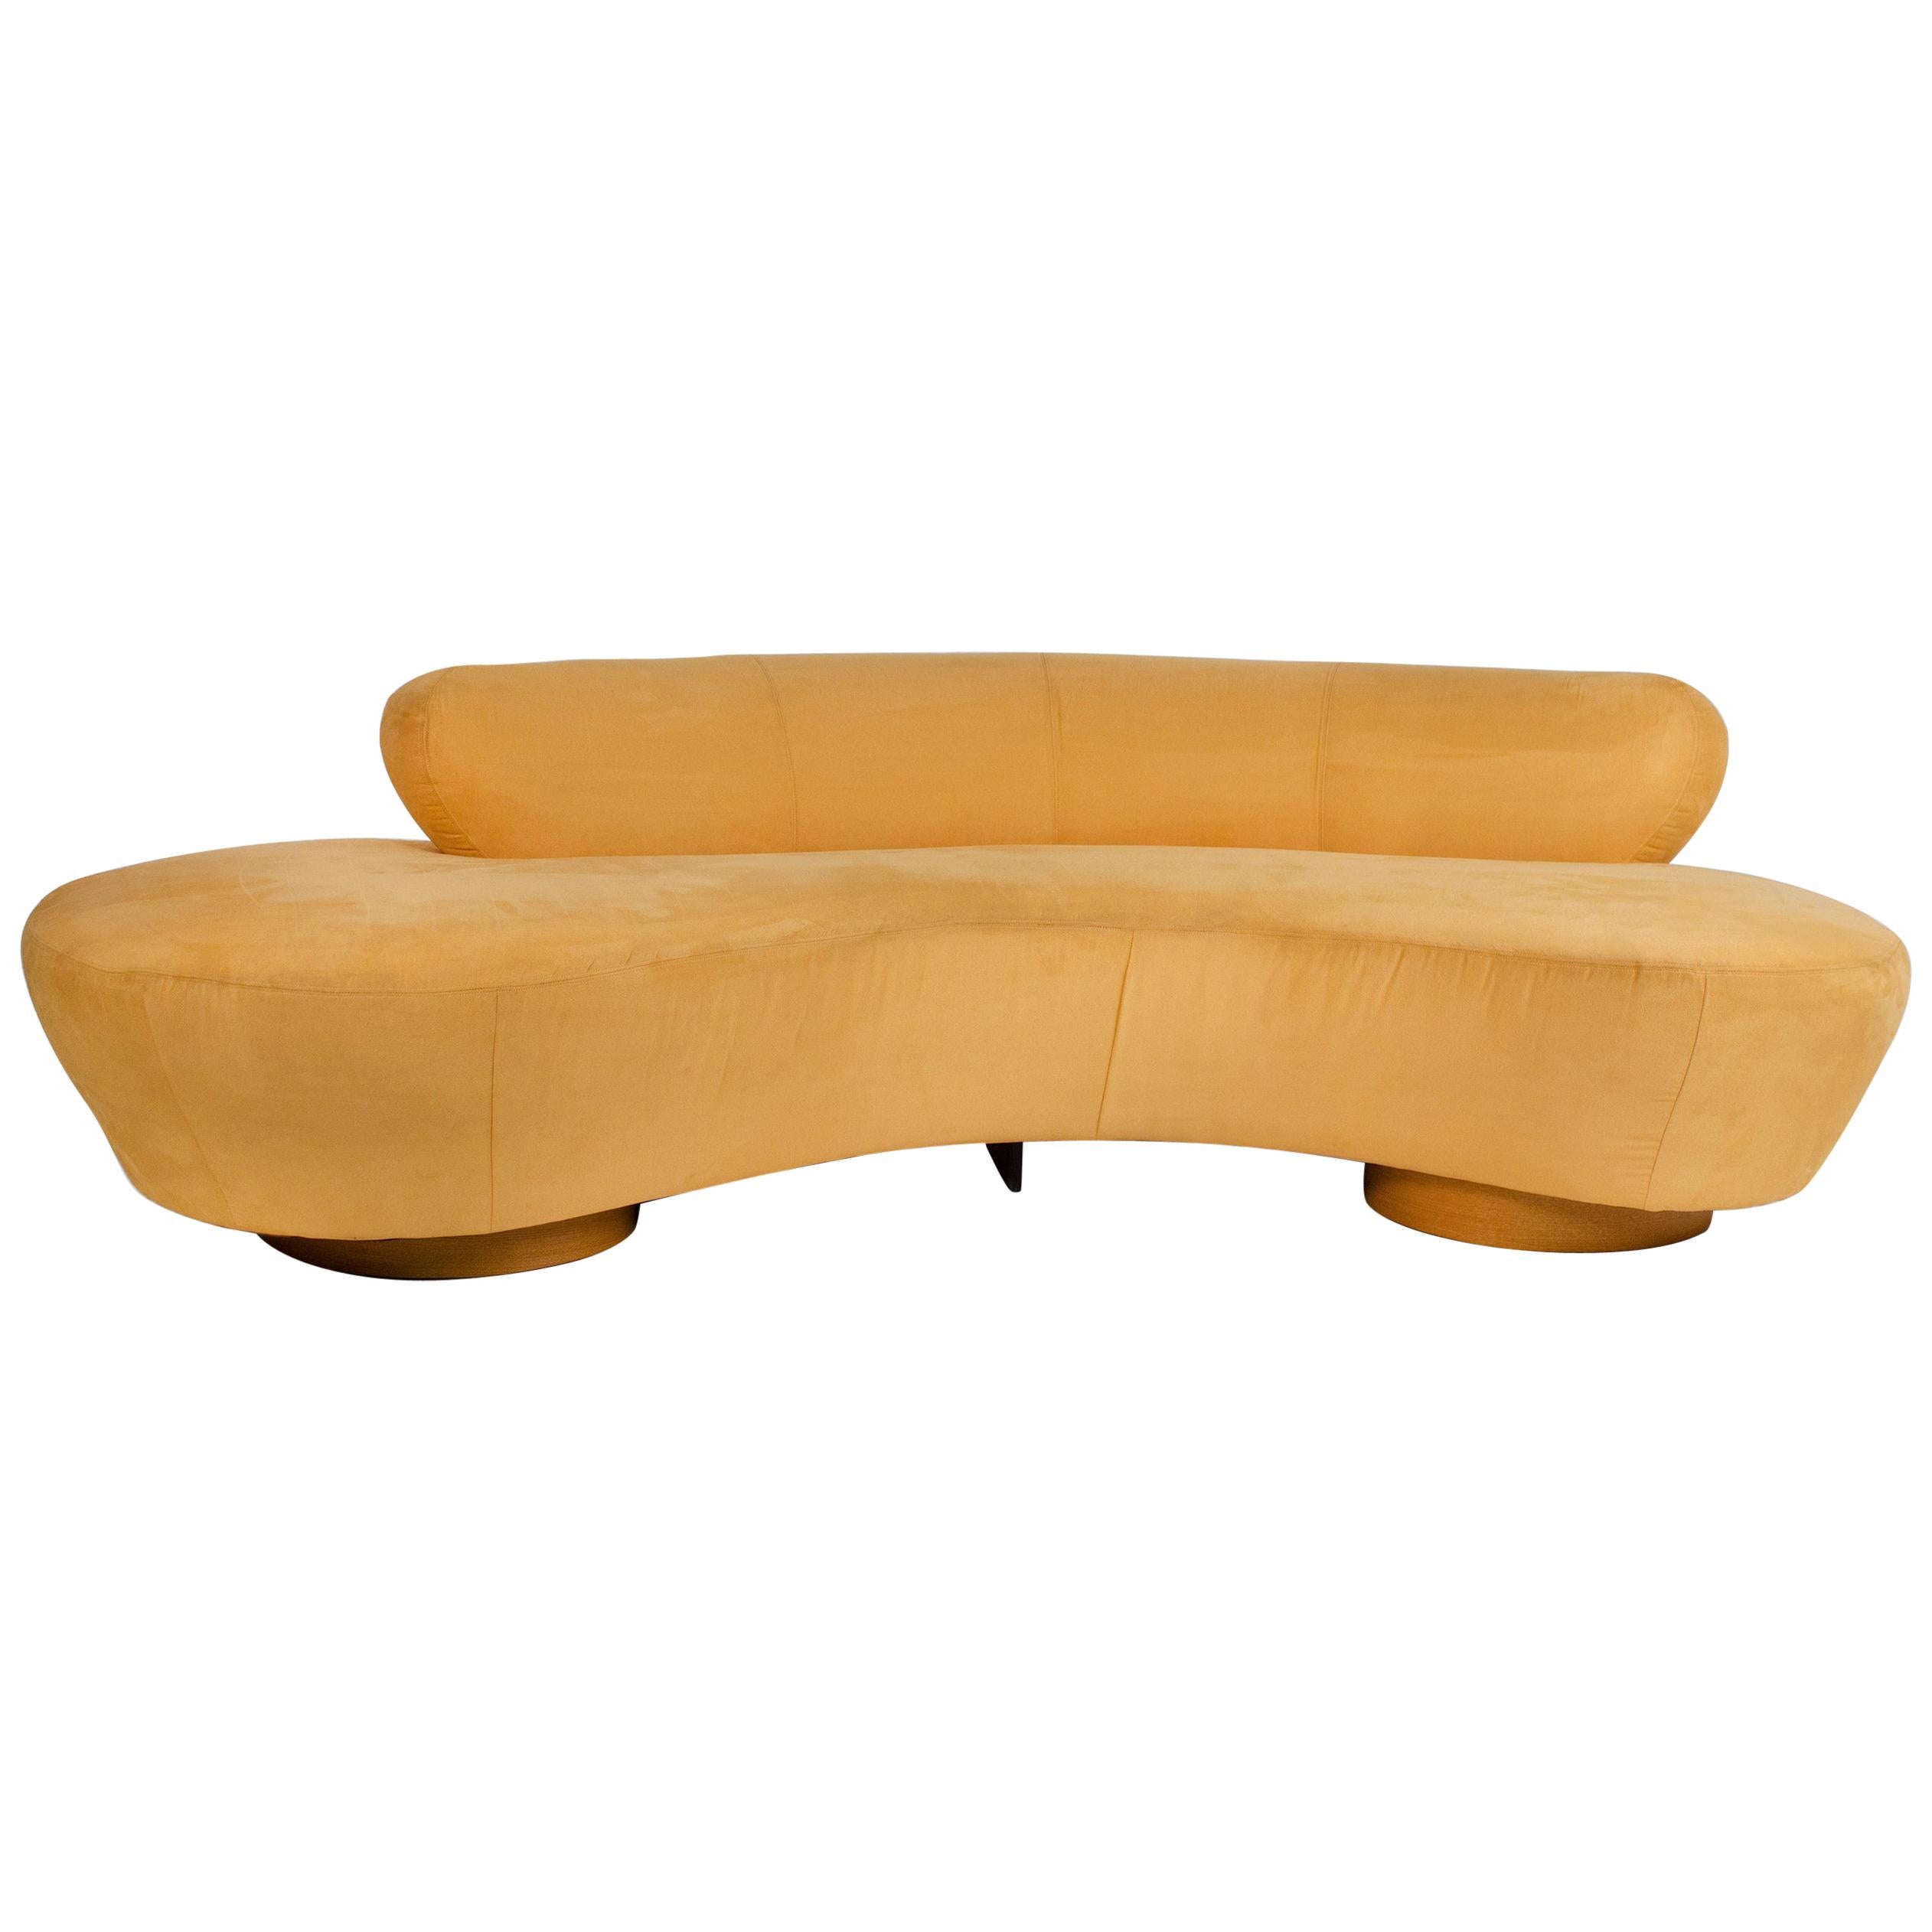 Vladimir Kagan Cloud Sofa for Directional with Oak Pedestal Base